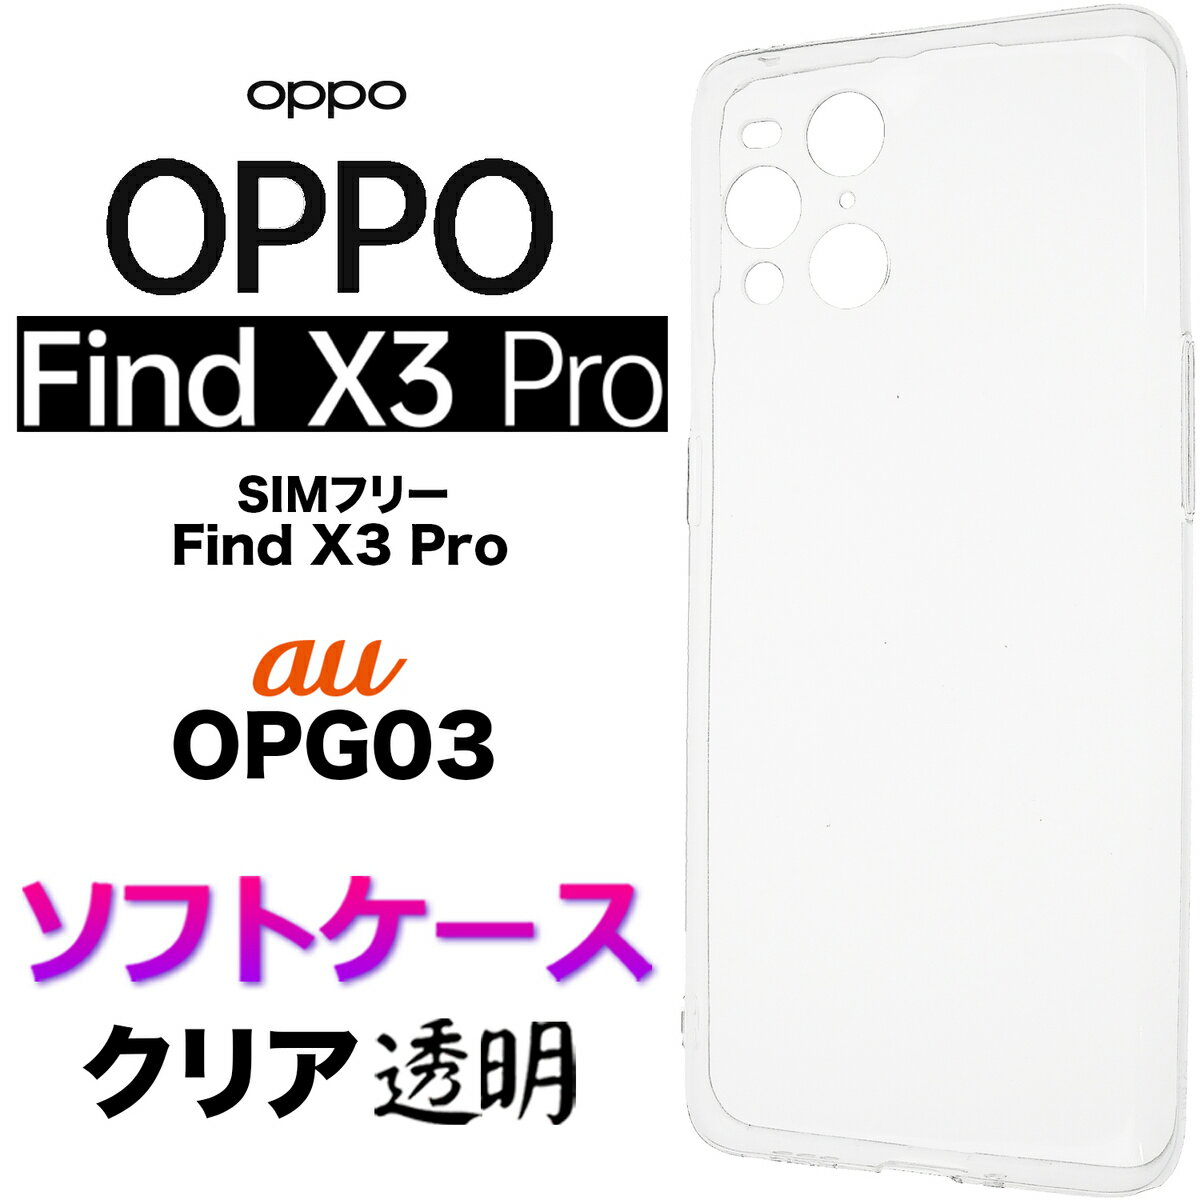 OPPO Find X3 Pro クリア ソフトケース シンプル バック カバー 無地 透明 ブラック 黒 スマホケース スマホカバー ストラップホール 全面保護 耐衝撃 TPU マイクロドット OPG03 オッポ ファインド エックススリー プロ au エーユー SIMフリー リノ findx3pro x3pro